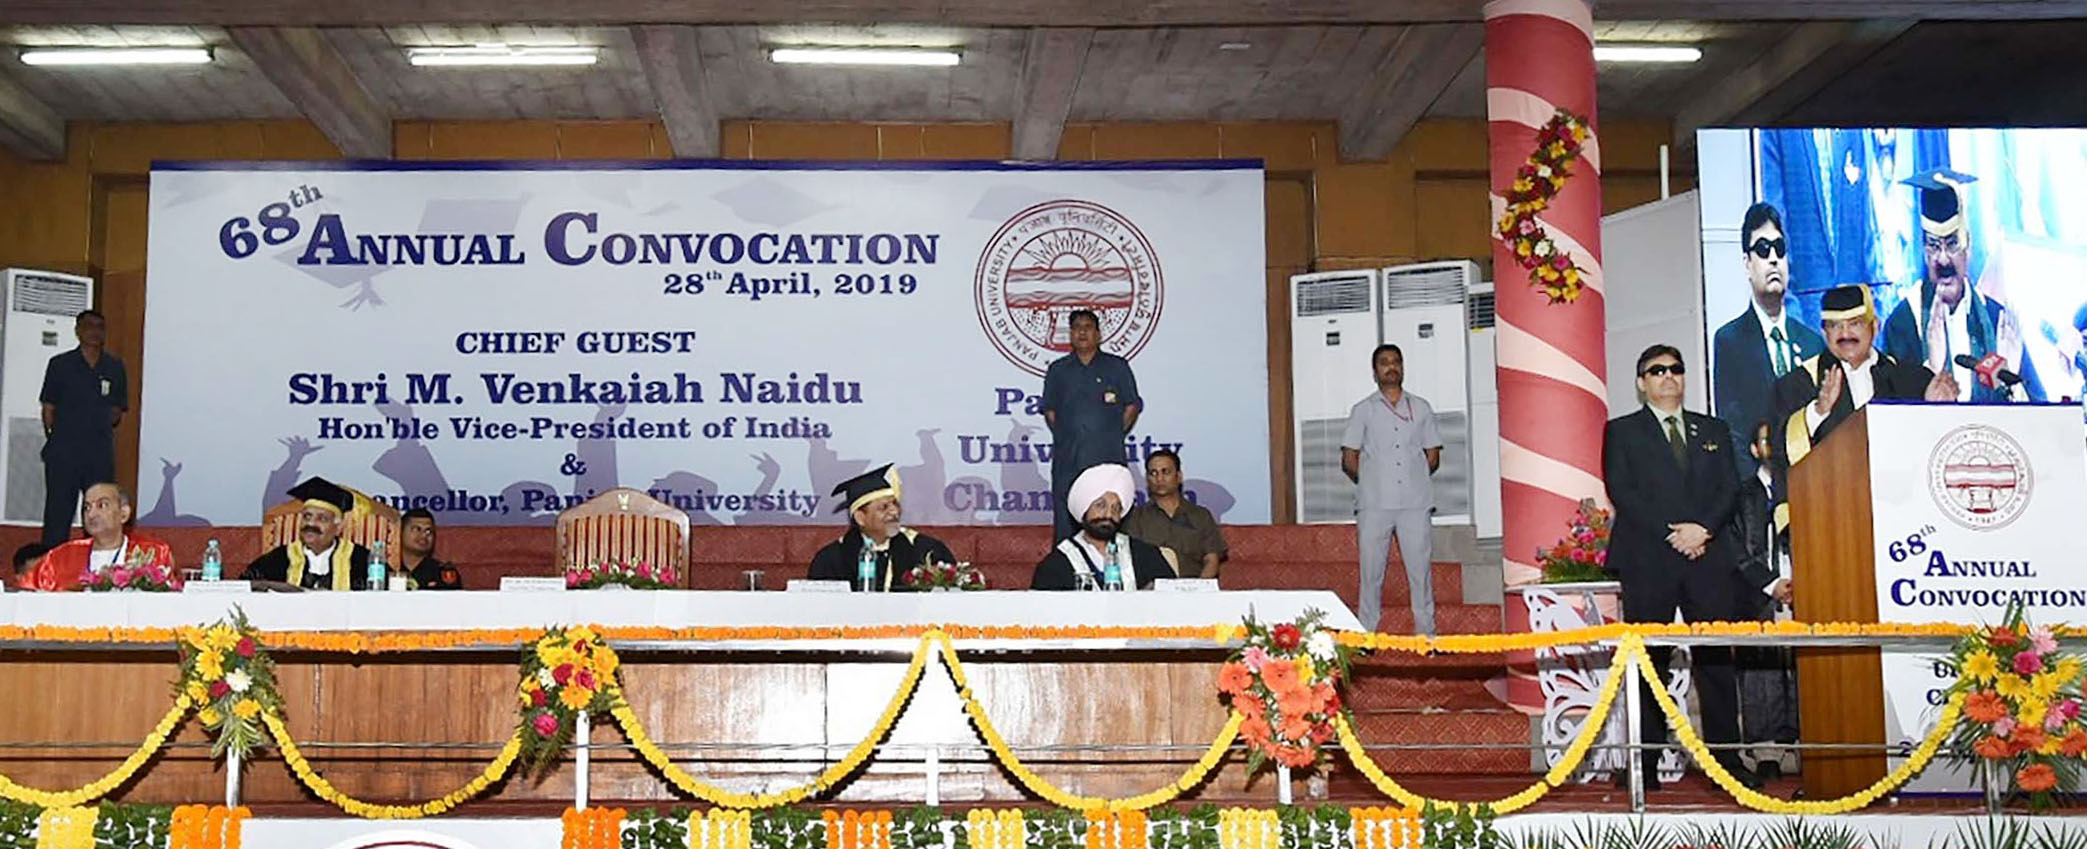 The Vice President, Shri M. Venkaiah Naidu addressing at the 68th Convocation of Panjab University, in Chandigarh, Punjab on April 28, 2019.